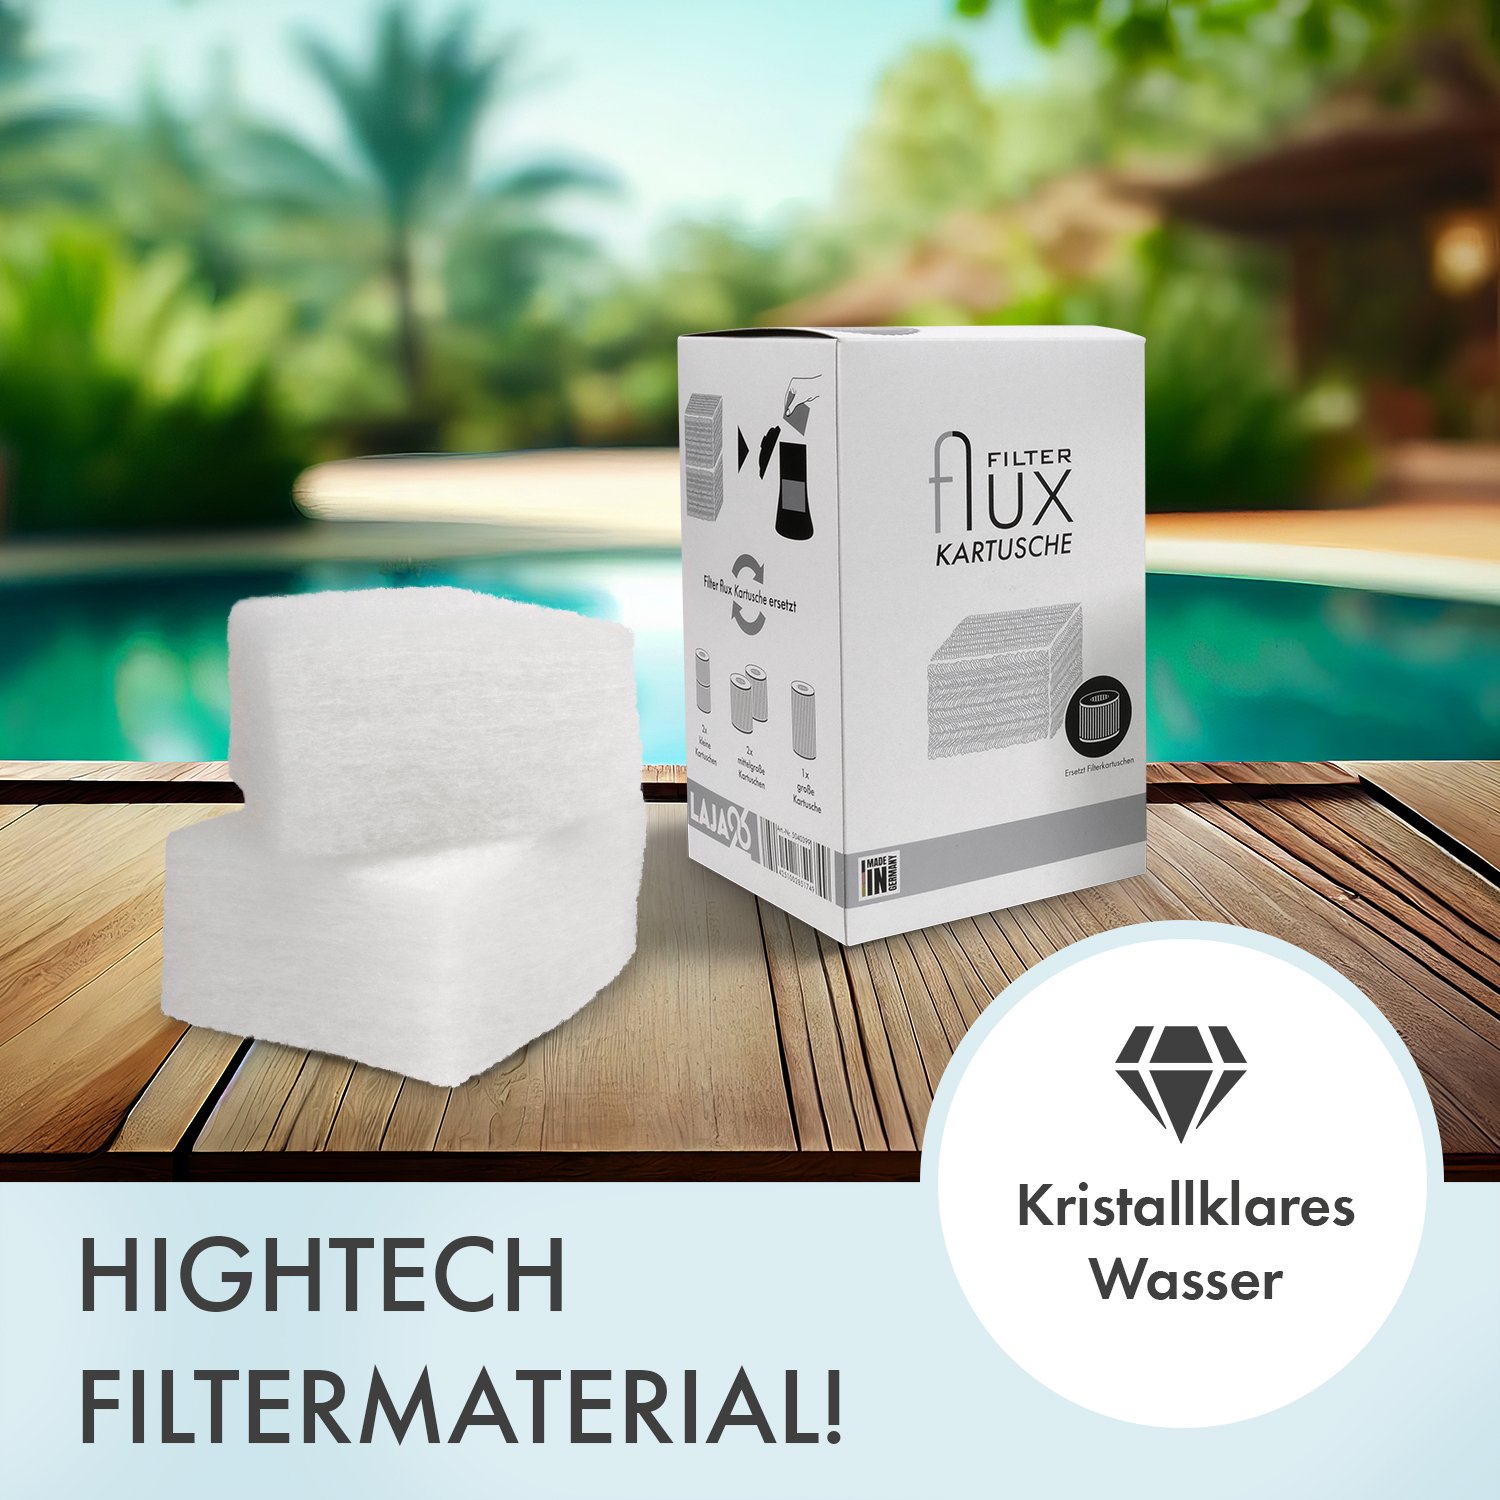 Filter flux UNIVERSAL Kartusche (Doppelpack)